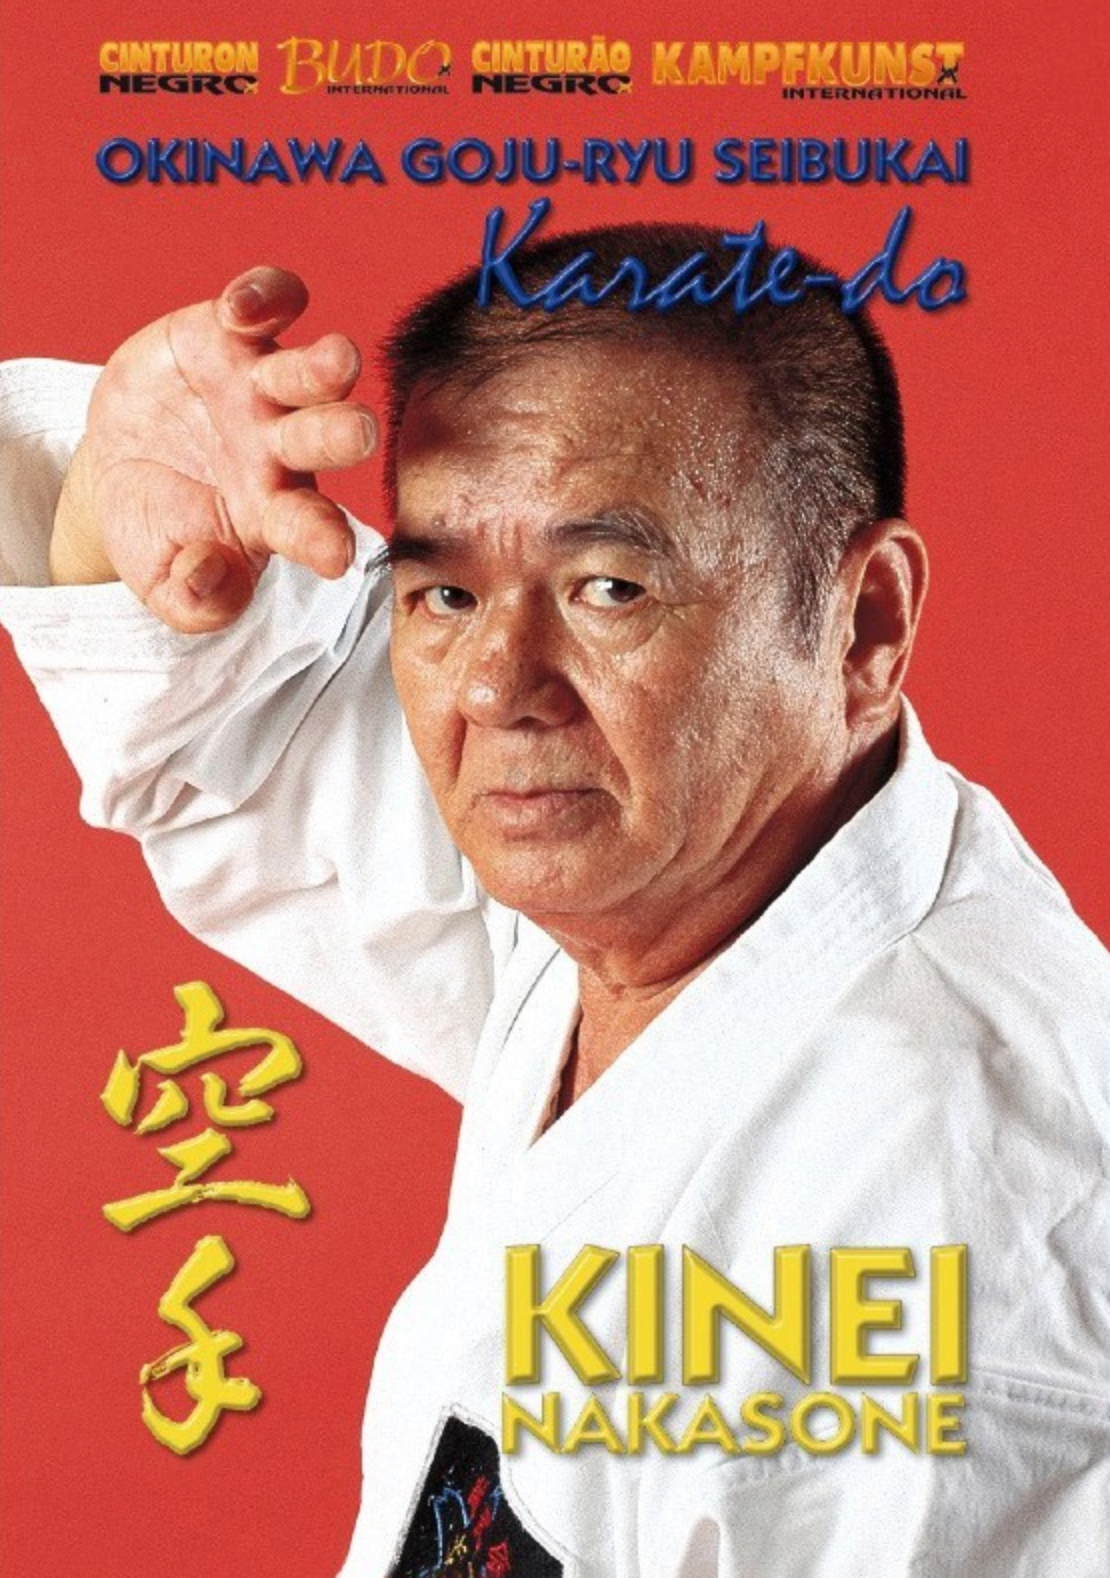 Okinawa Goju Ryu Seibukai Karate DVD with Kinei Nakasone - Budovideos Inc